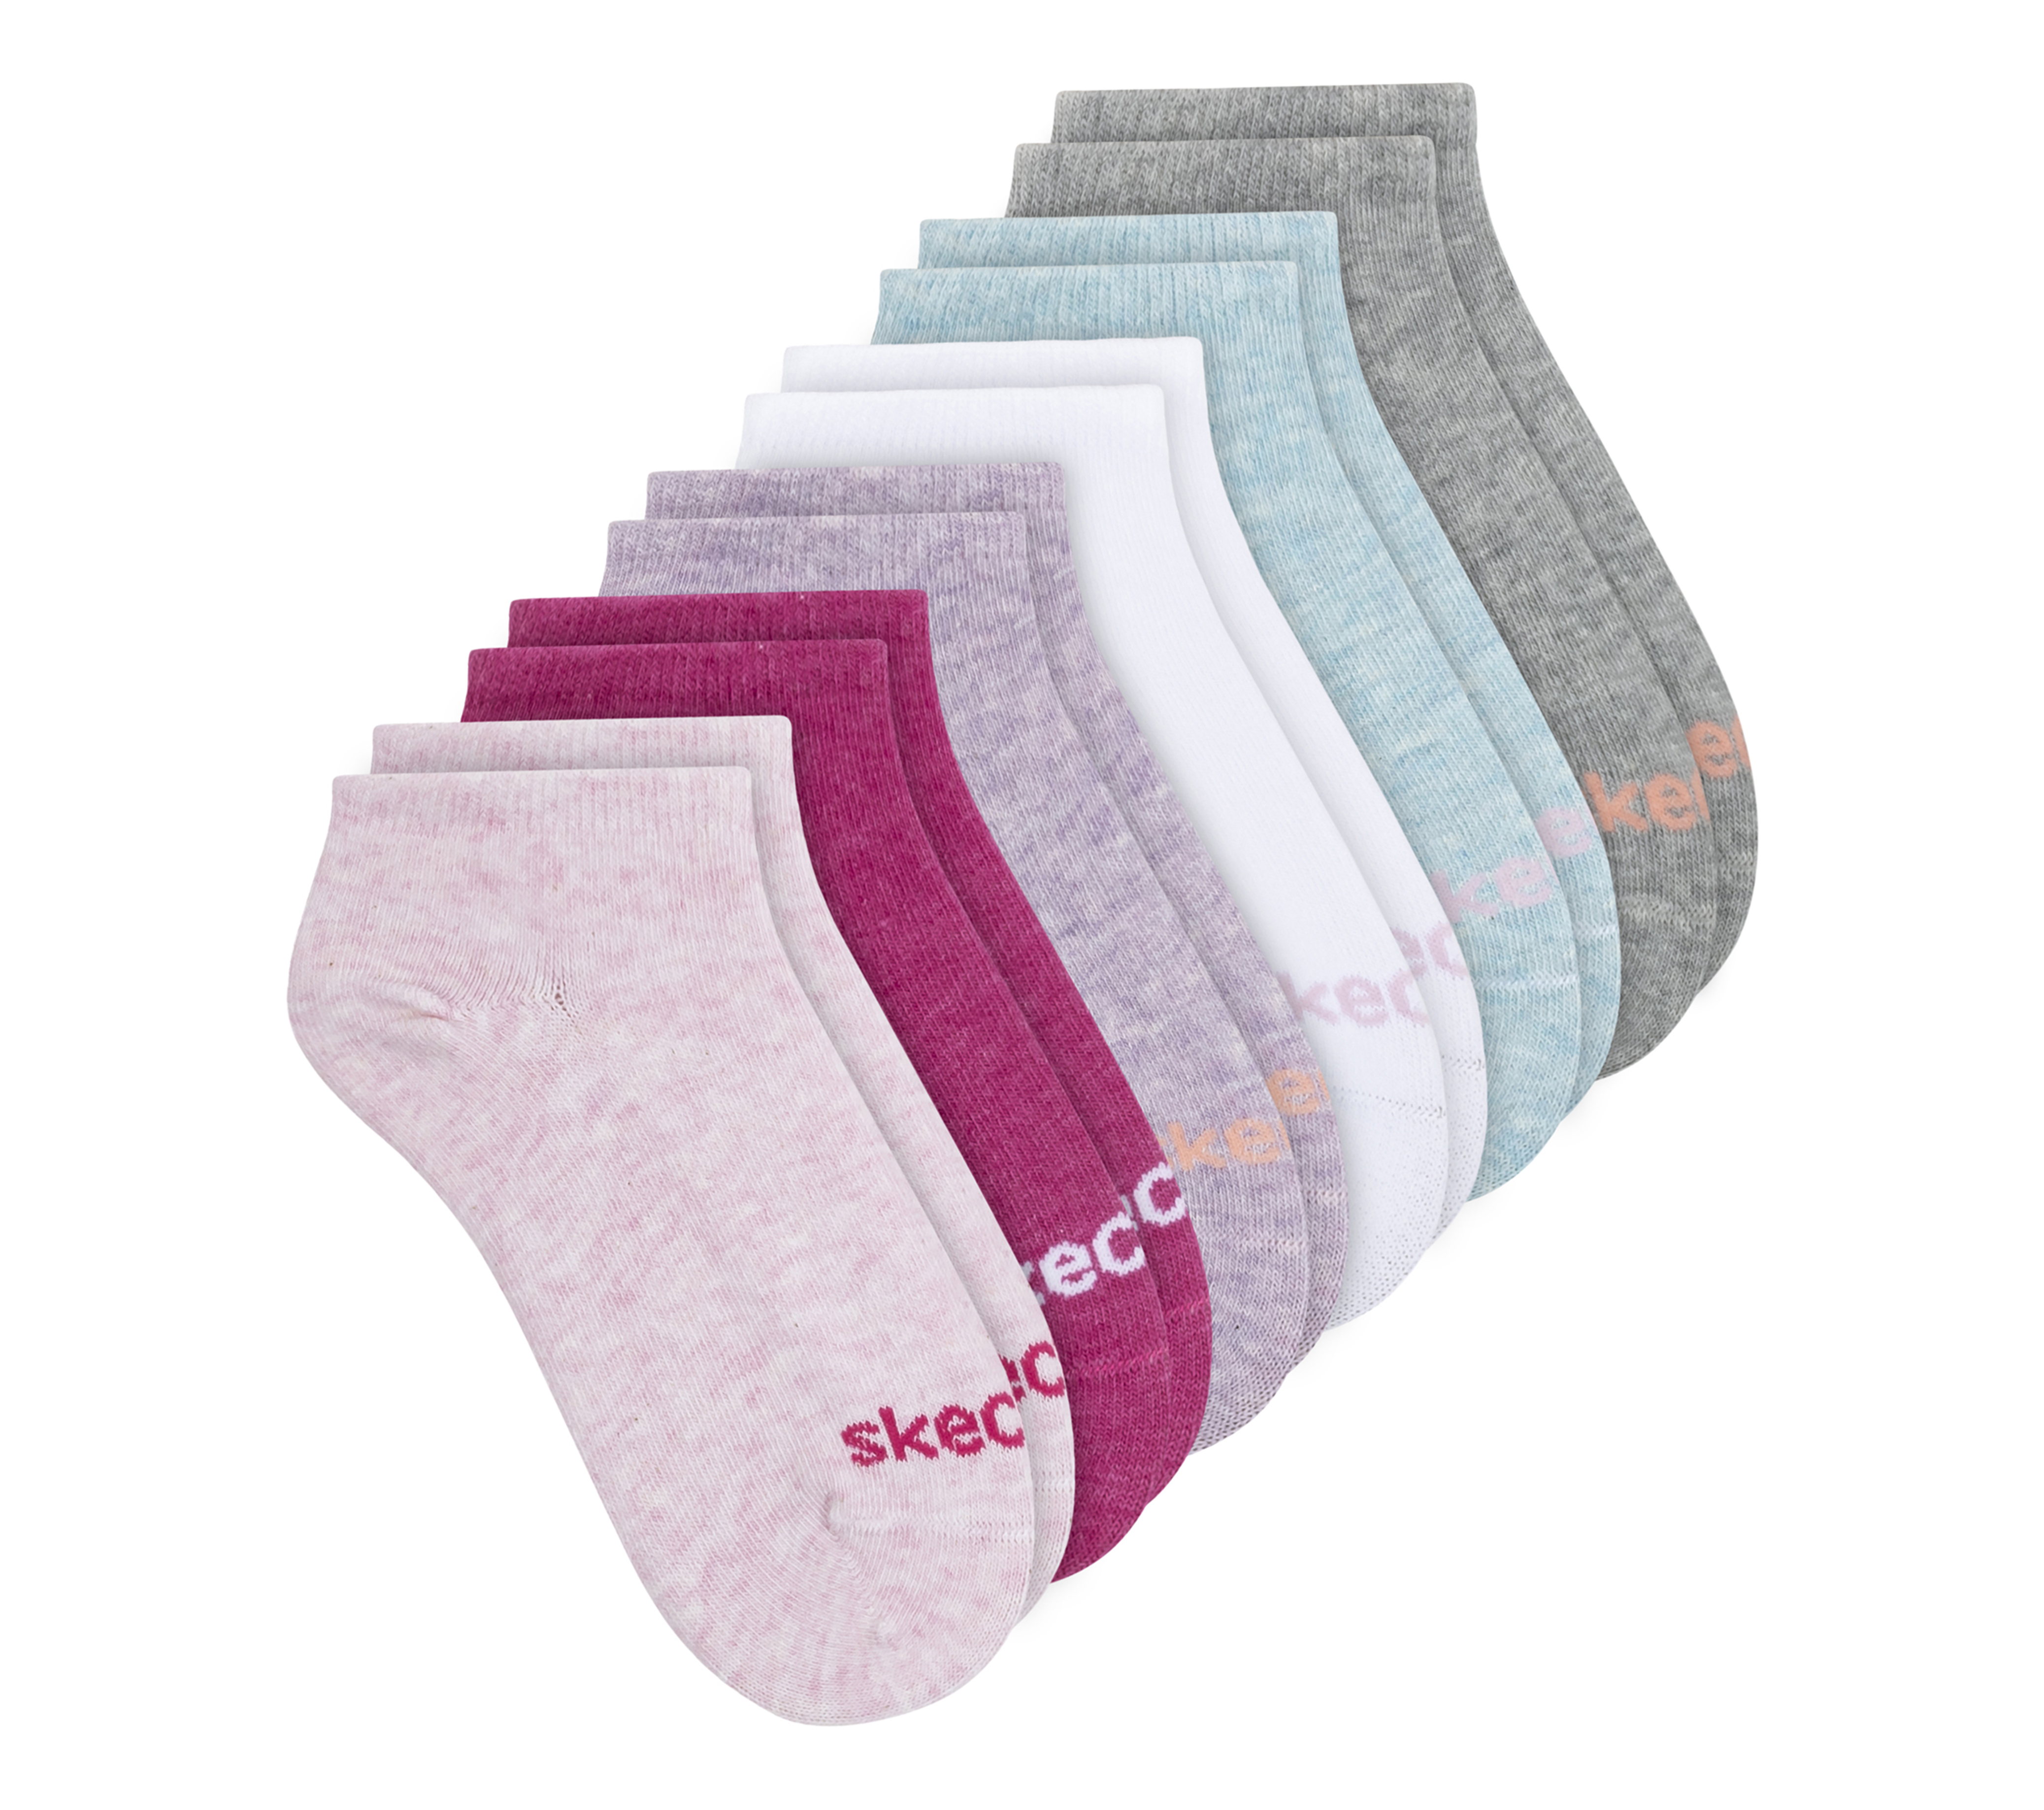 SKECHERS 6 Pack Socks | Show Cotton No